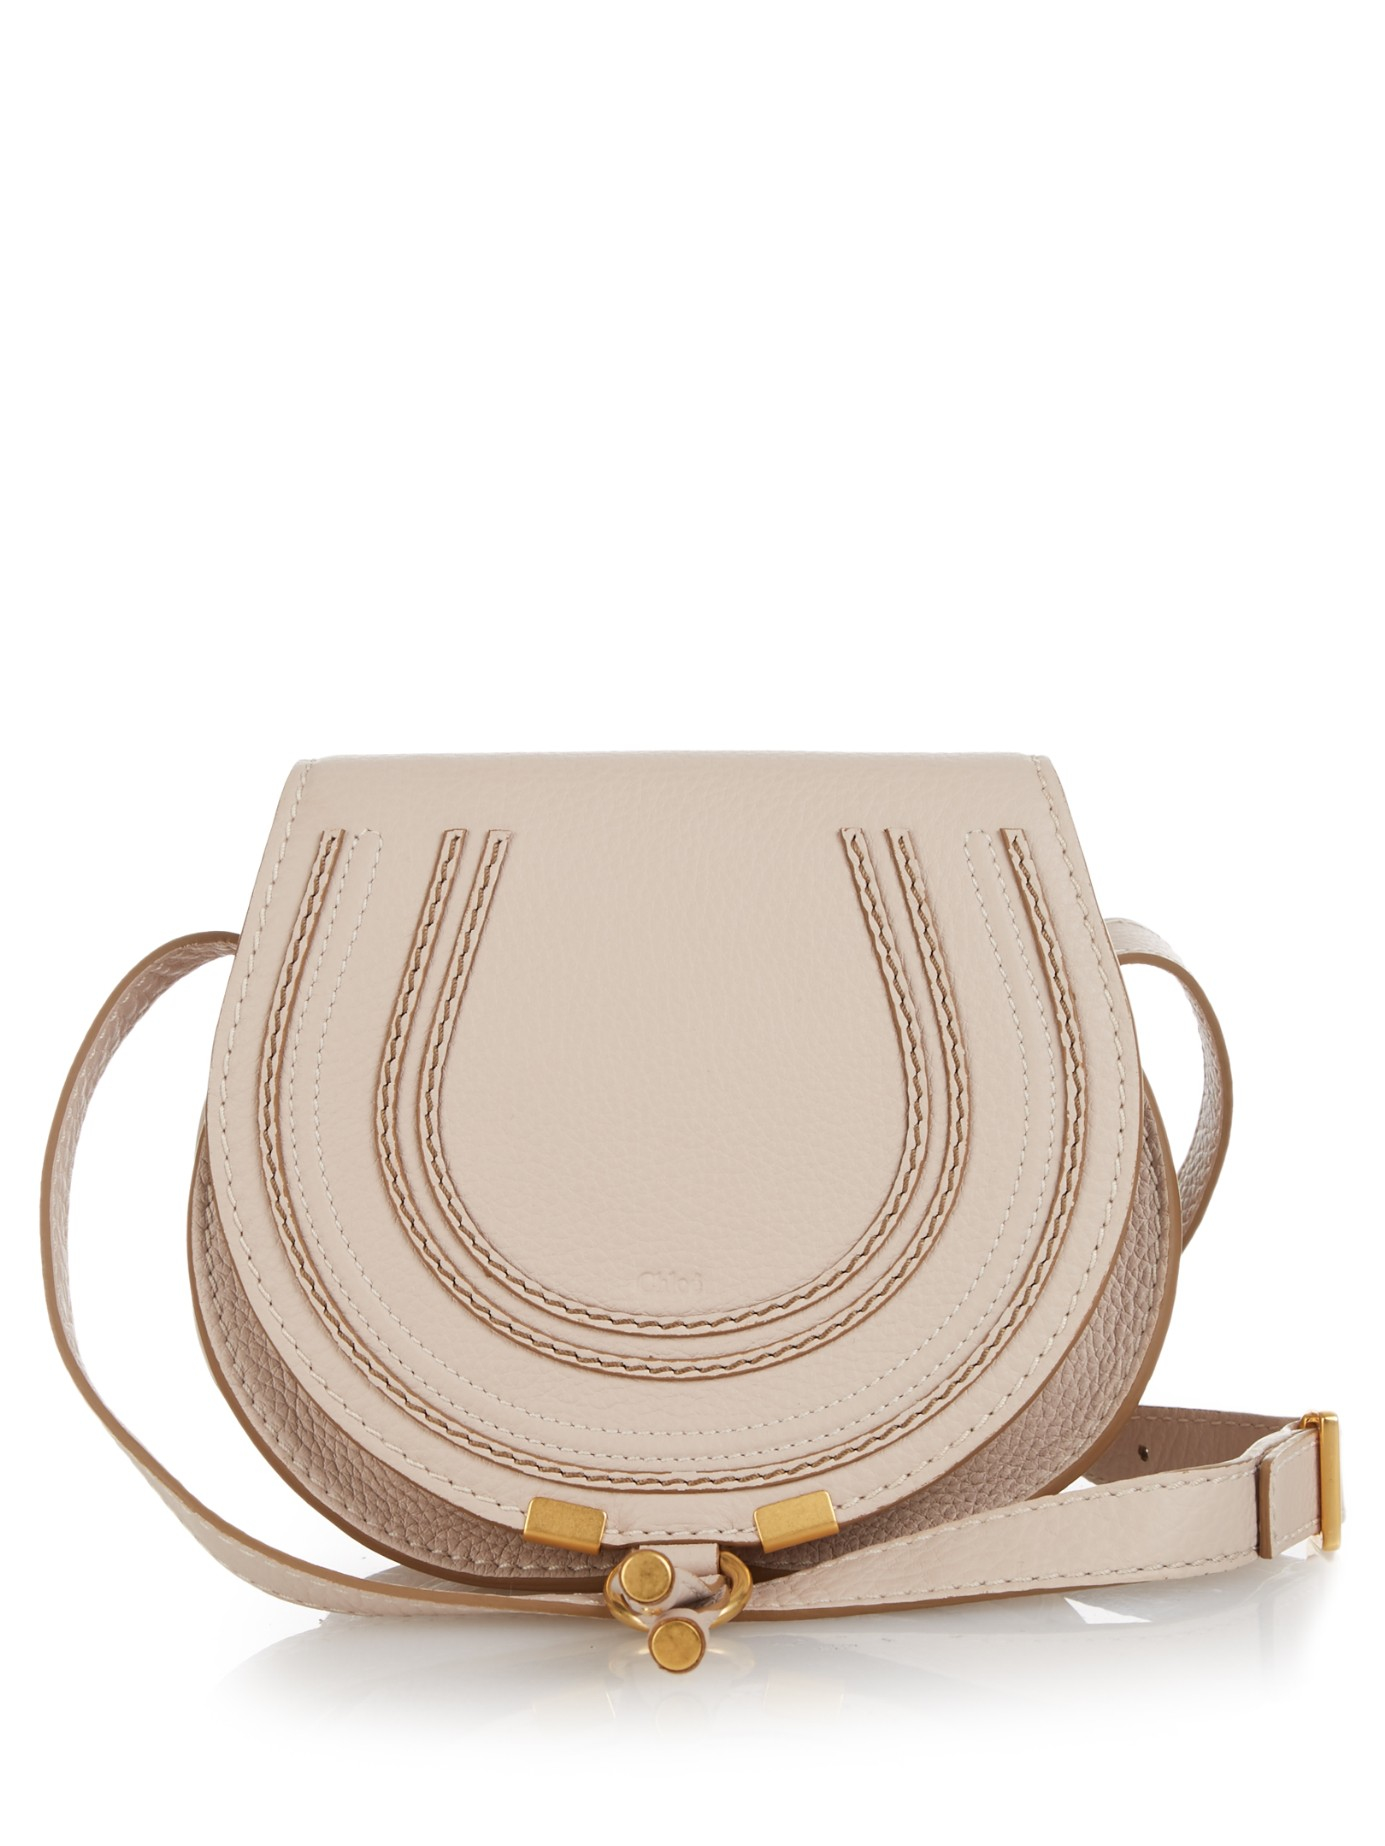 Chloé Marcie Mini Leather Cross-body Bag in Cream (Natural) - Lyst